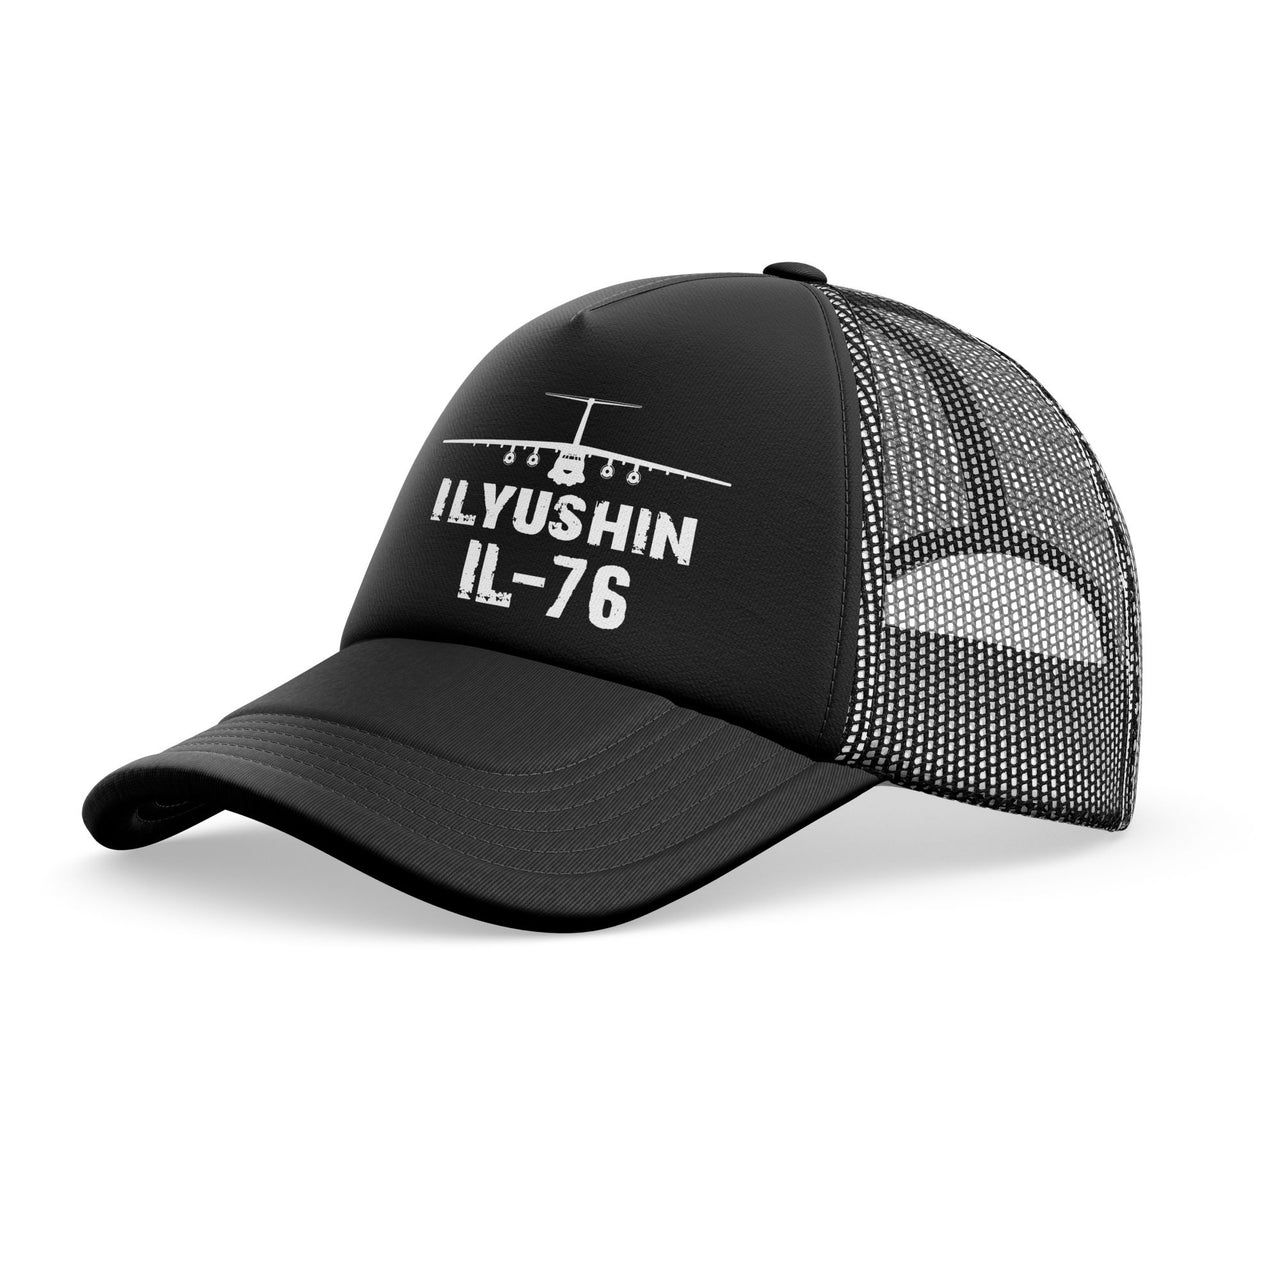 ILyushin IL-76 & Plane Designed Trucker Caps & Hats